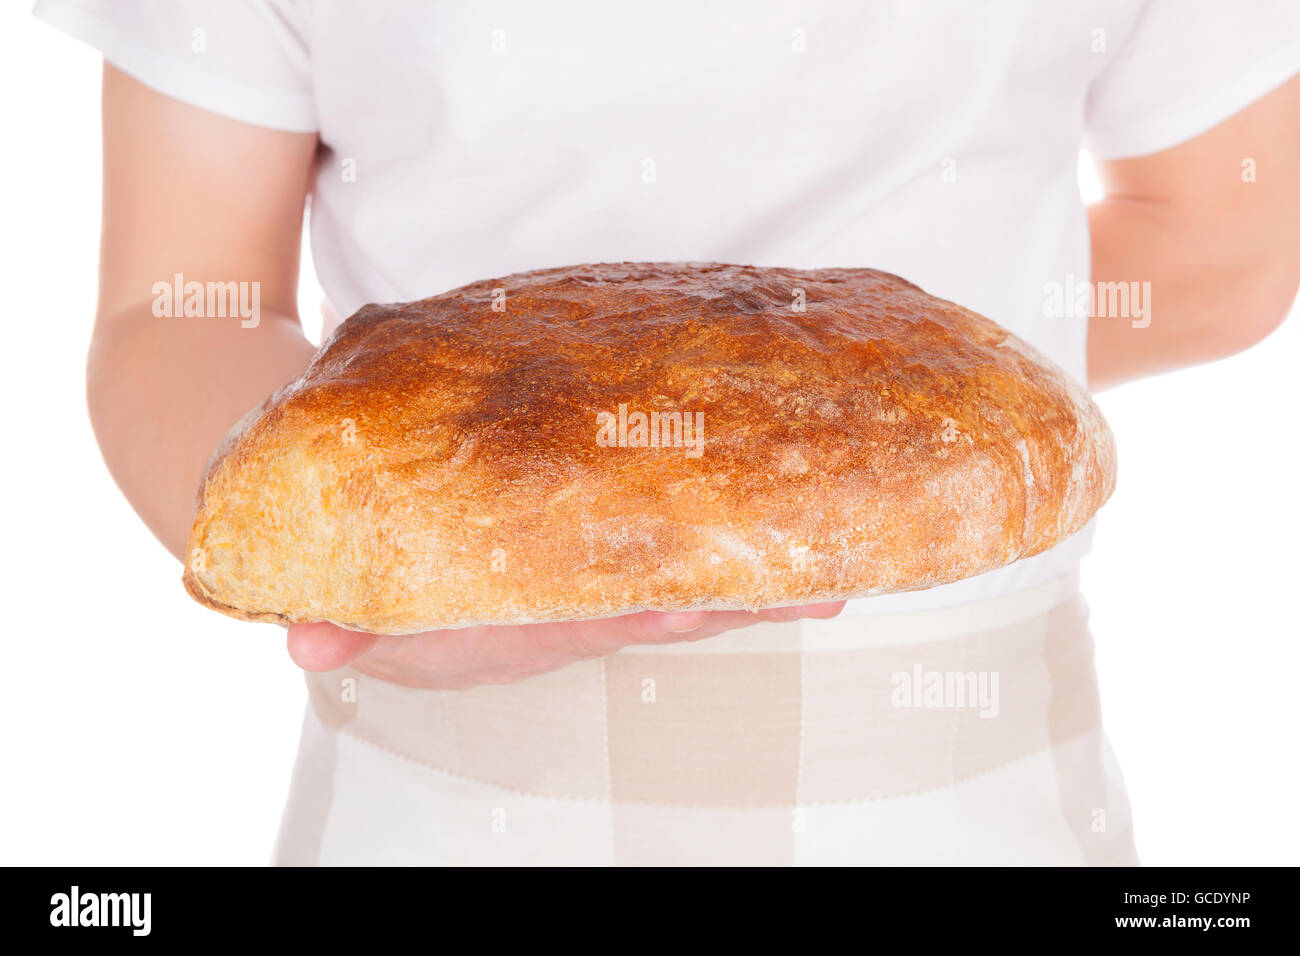 Baker holding fresh made bread isolated on white background. Baker and bakery. Stock Photo